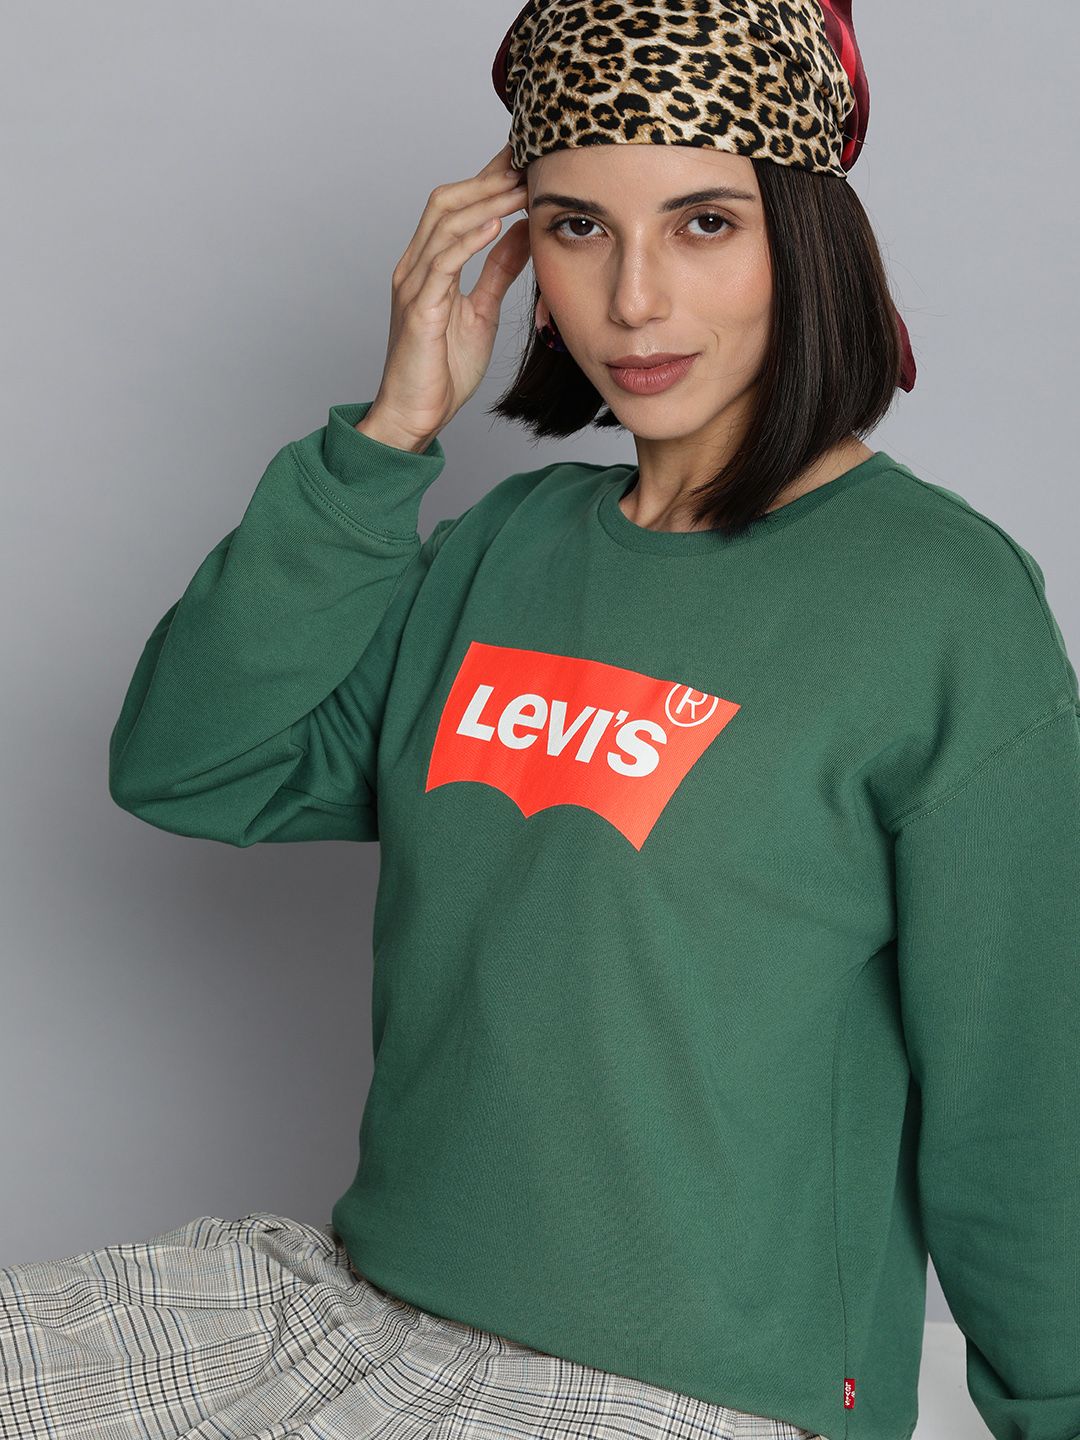 Levis Women Green Printed Sweatshirt Price in India